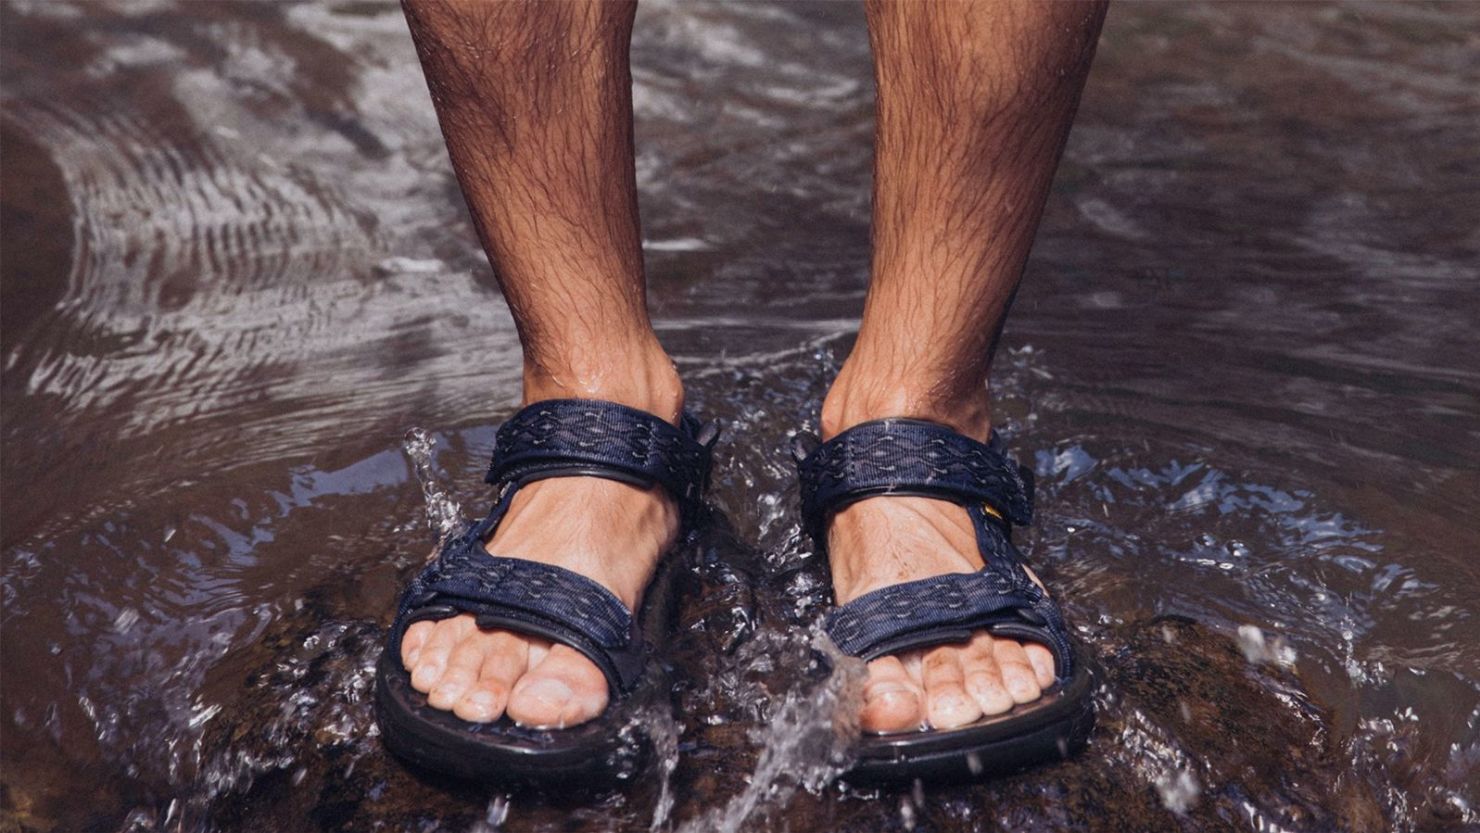 Mens Casual Comfy Flip-Flops Sandals Summer Slingback Slippers